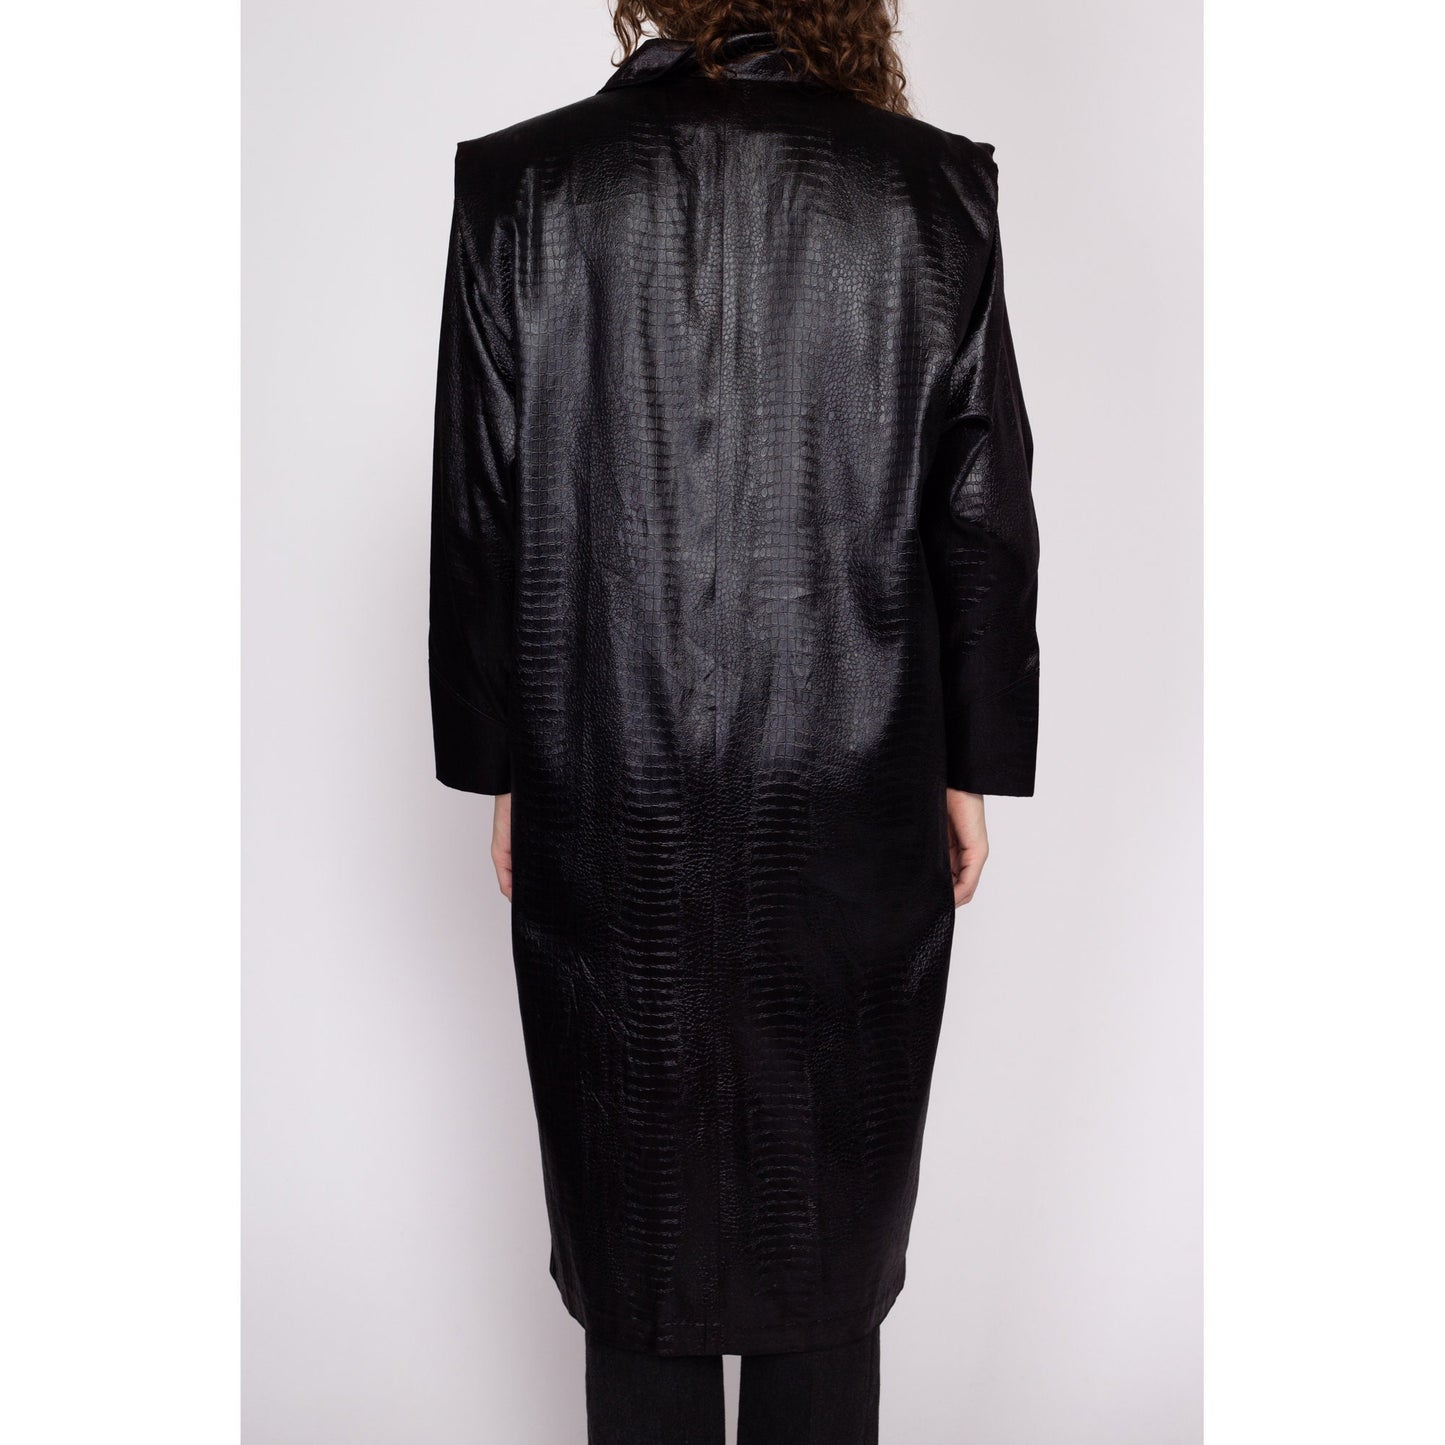 M| 80s Black Faux Crocodile Trench Coat - Medium | Vintage Wet Look Alligator Shiny Long Double Breasted Jacket